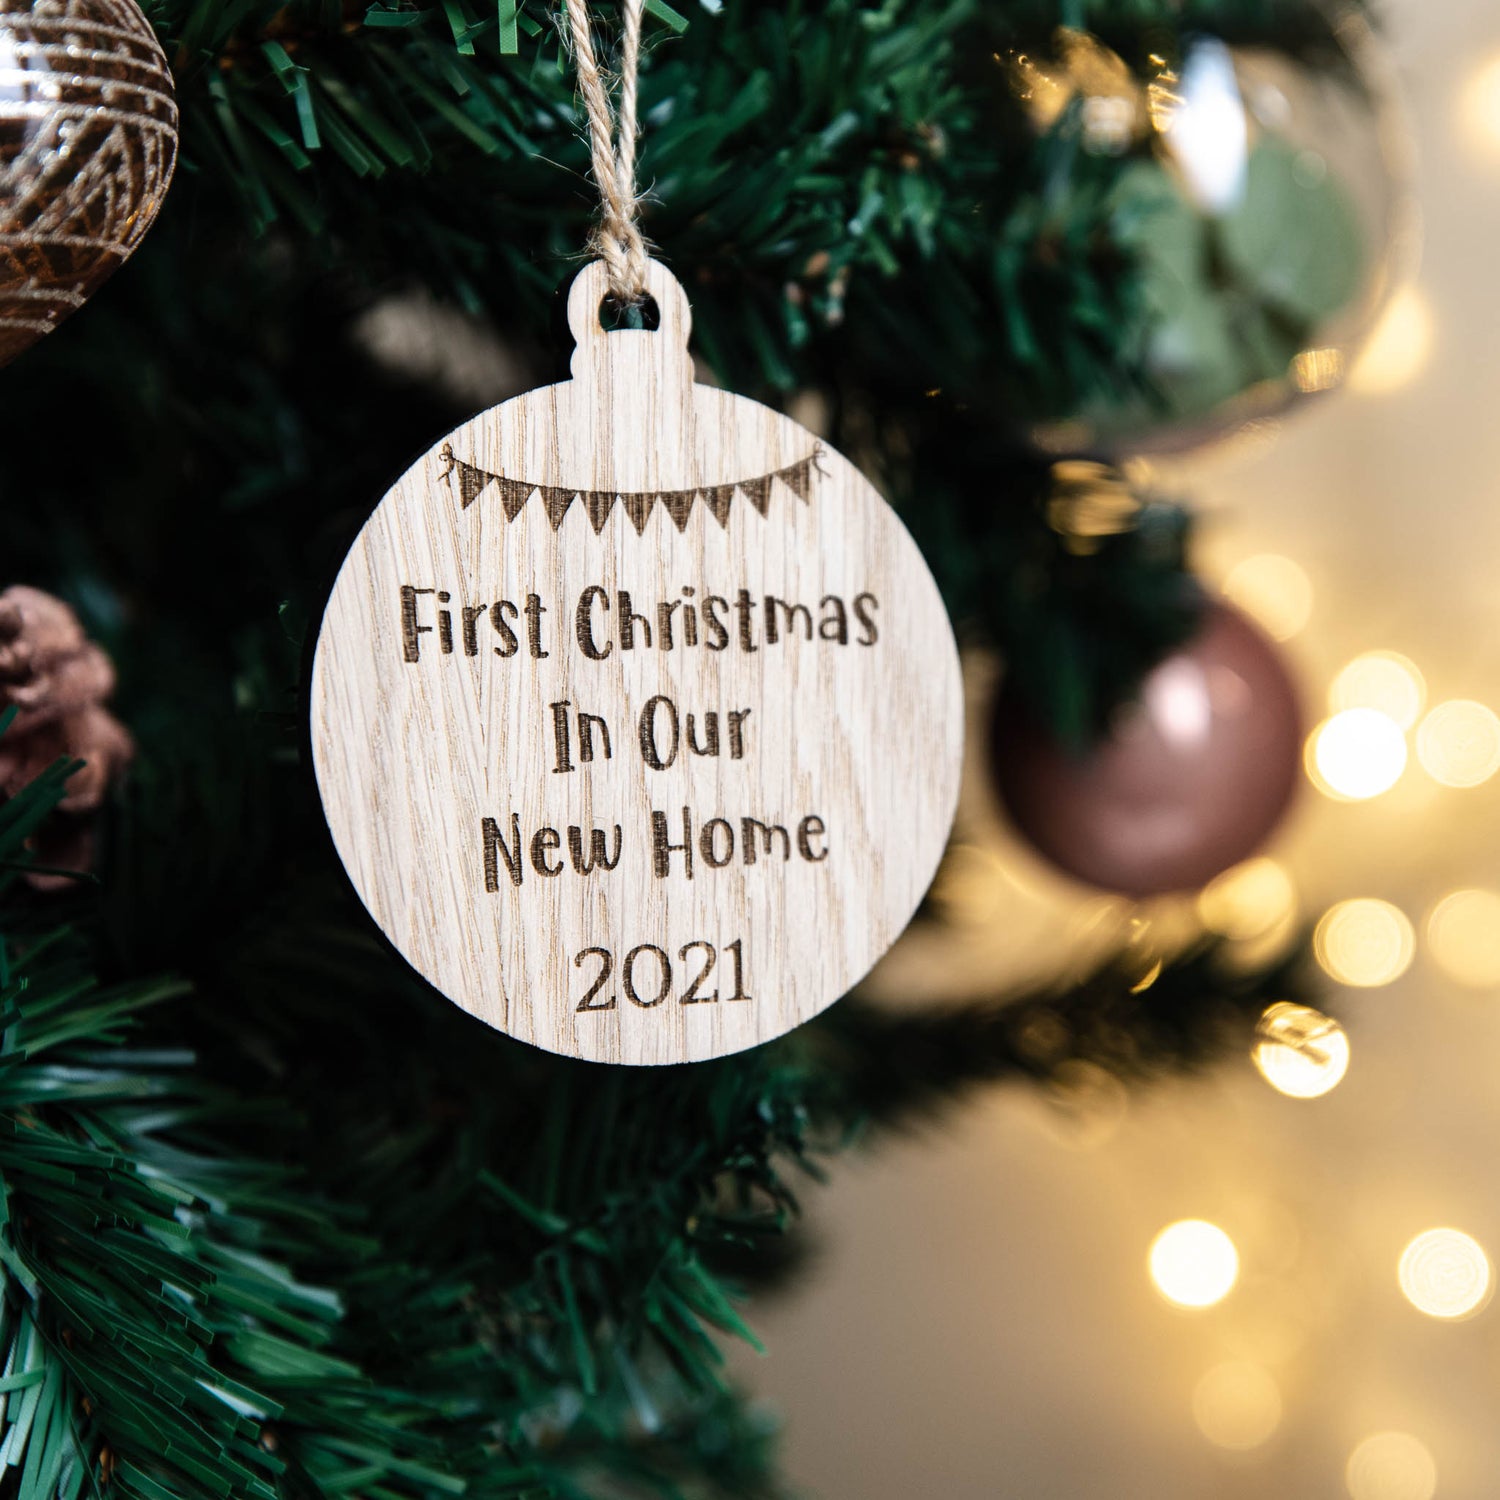 Christmas 2021 - Under £5